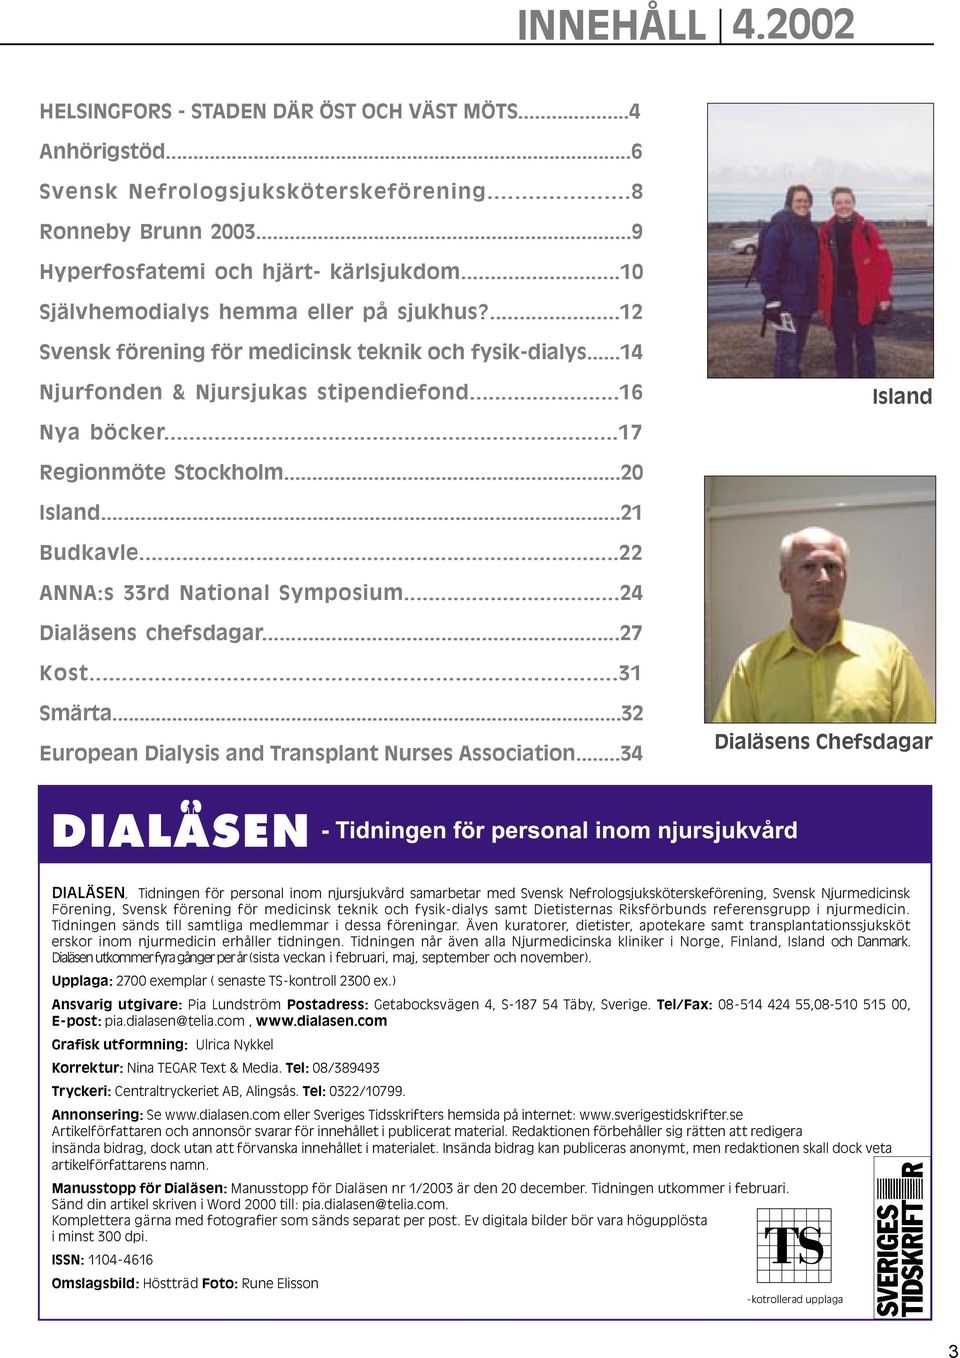 ..20 Island...21 Budkavle...22 ANNA:s 33rd National Symposium...24 Dialäsens chefsdagar...27 Kost...31 Smärta...32 European Dialysis and Transplant Nurses Association.